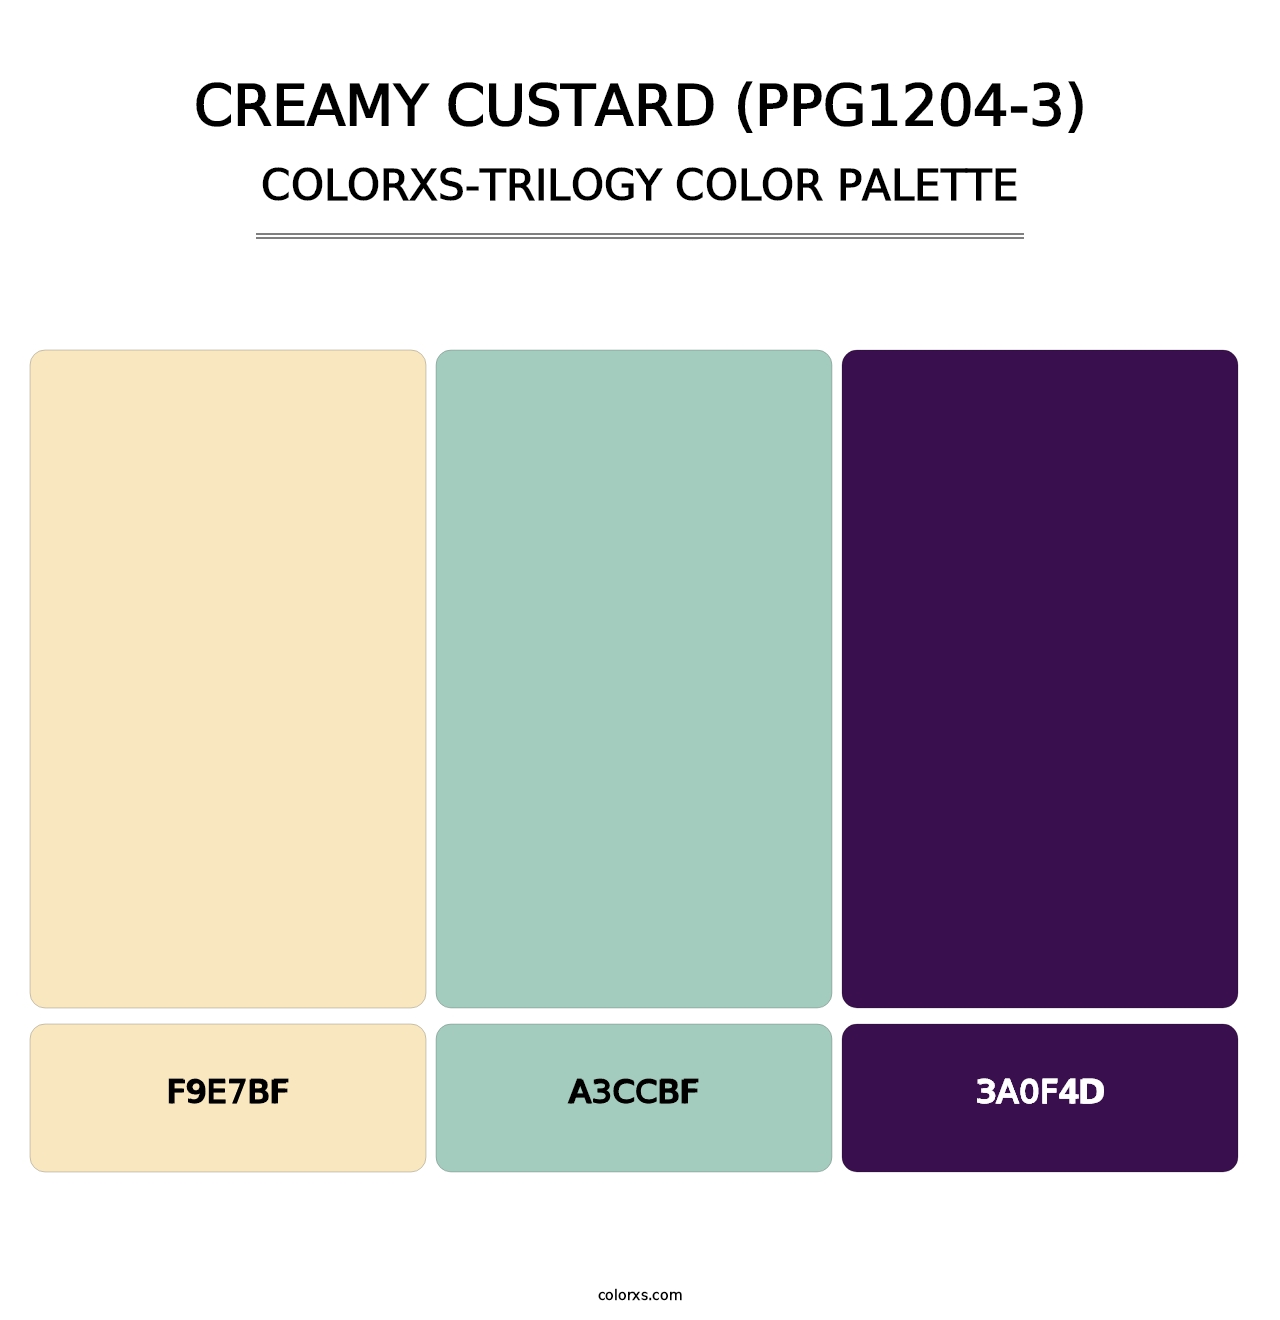 Creamy Custard (PPG1204-3) - Colorxs Trilogy Palette